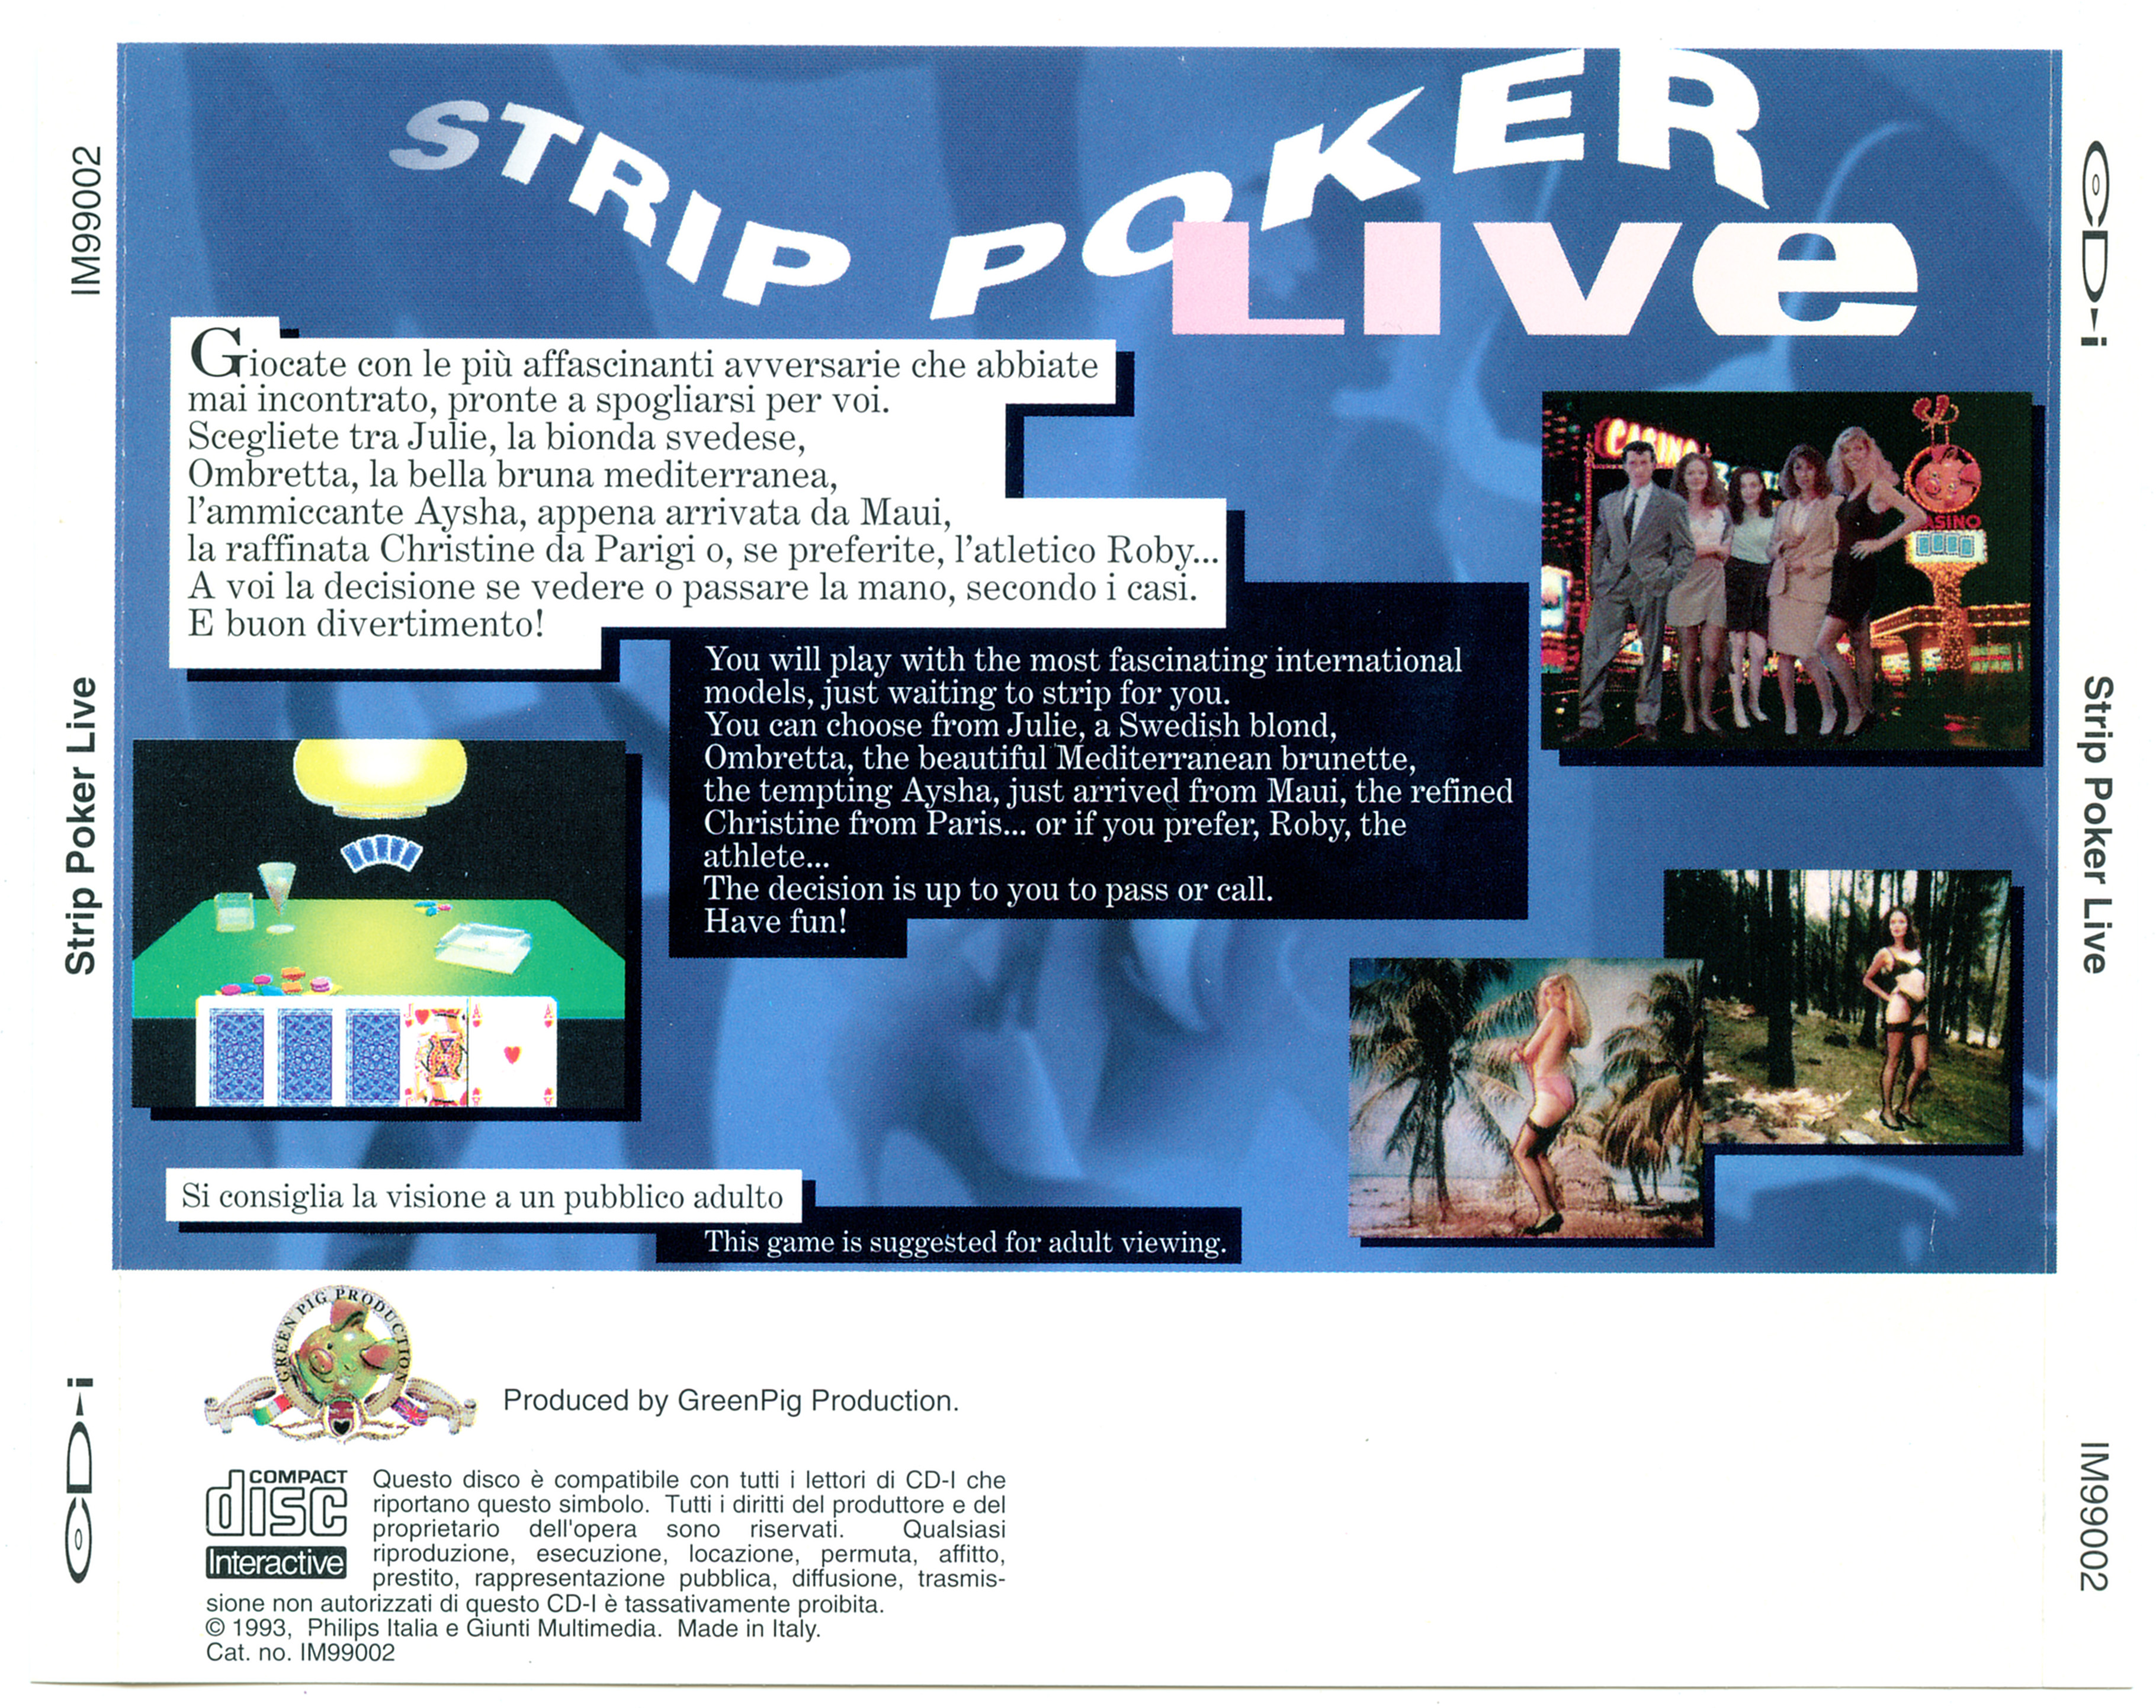 Strip Poker Live Philips CD-I English Italian CIB REGION FREE